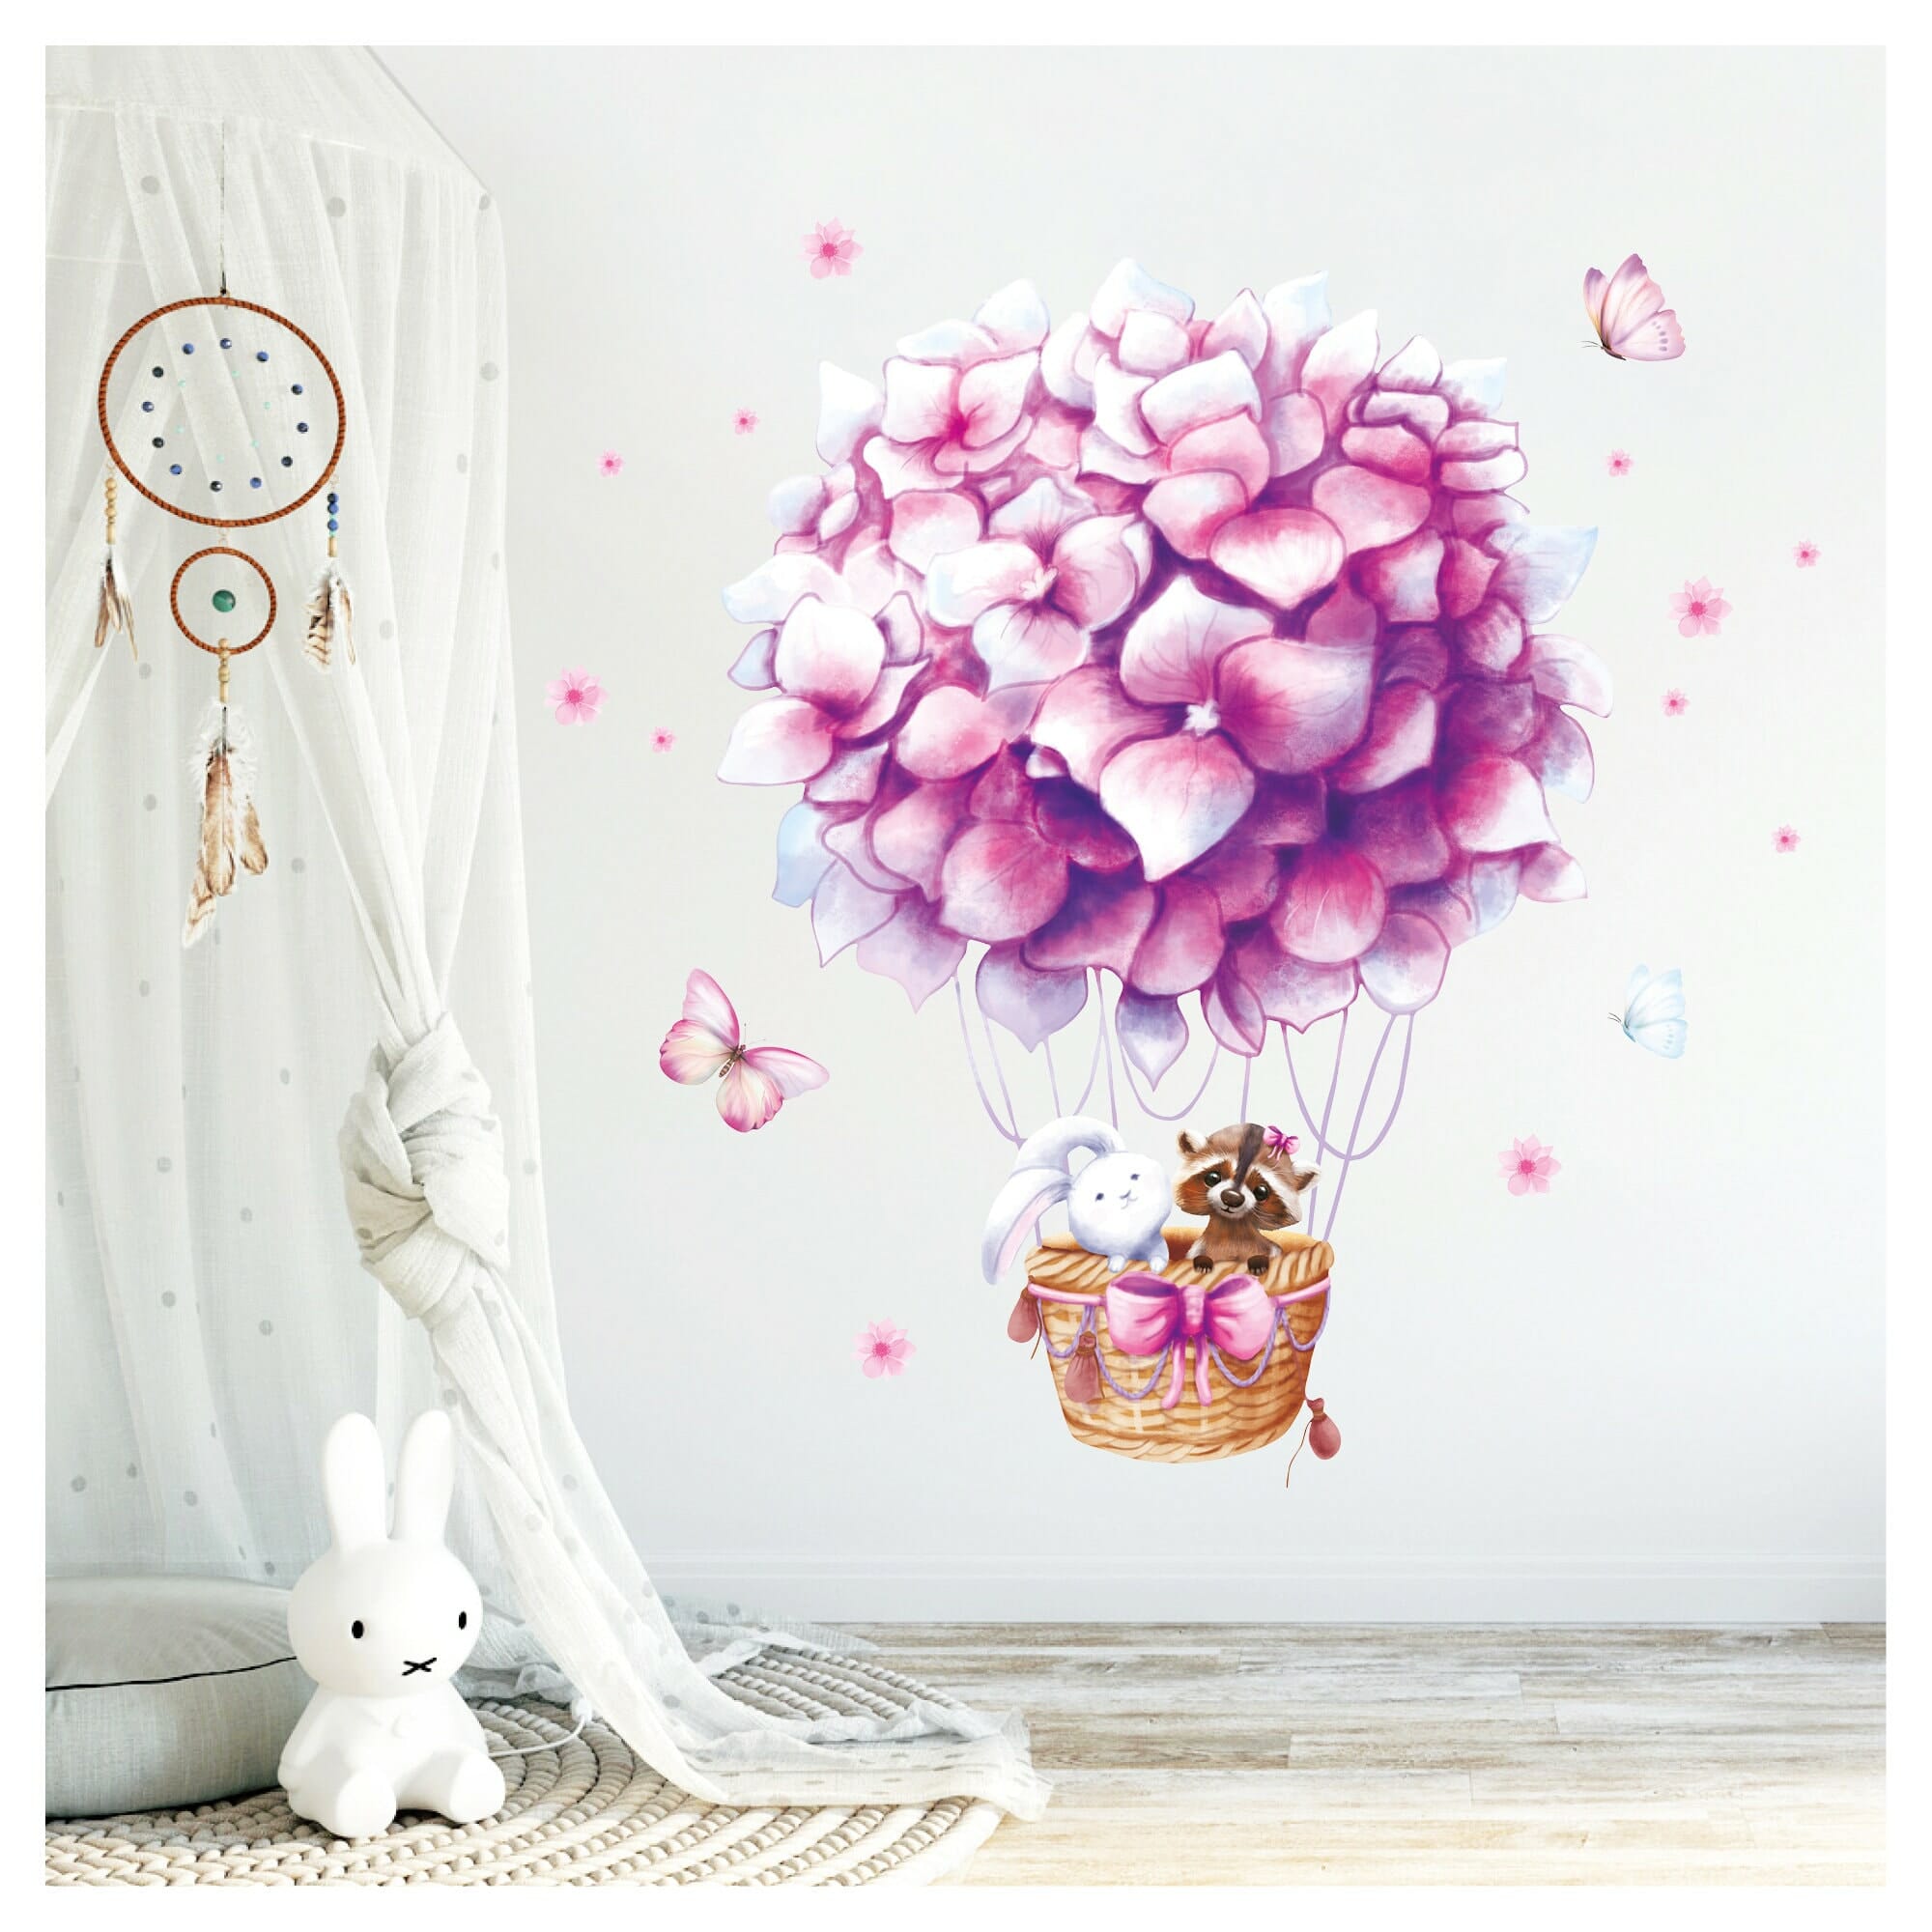 Wandtattoo Kinderzimmer Mädchen Heißluftballon Waschbär Hase Blumen rosa lila Farbiges Wandbild